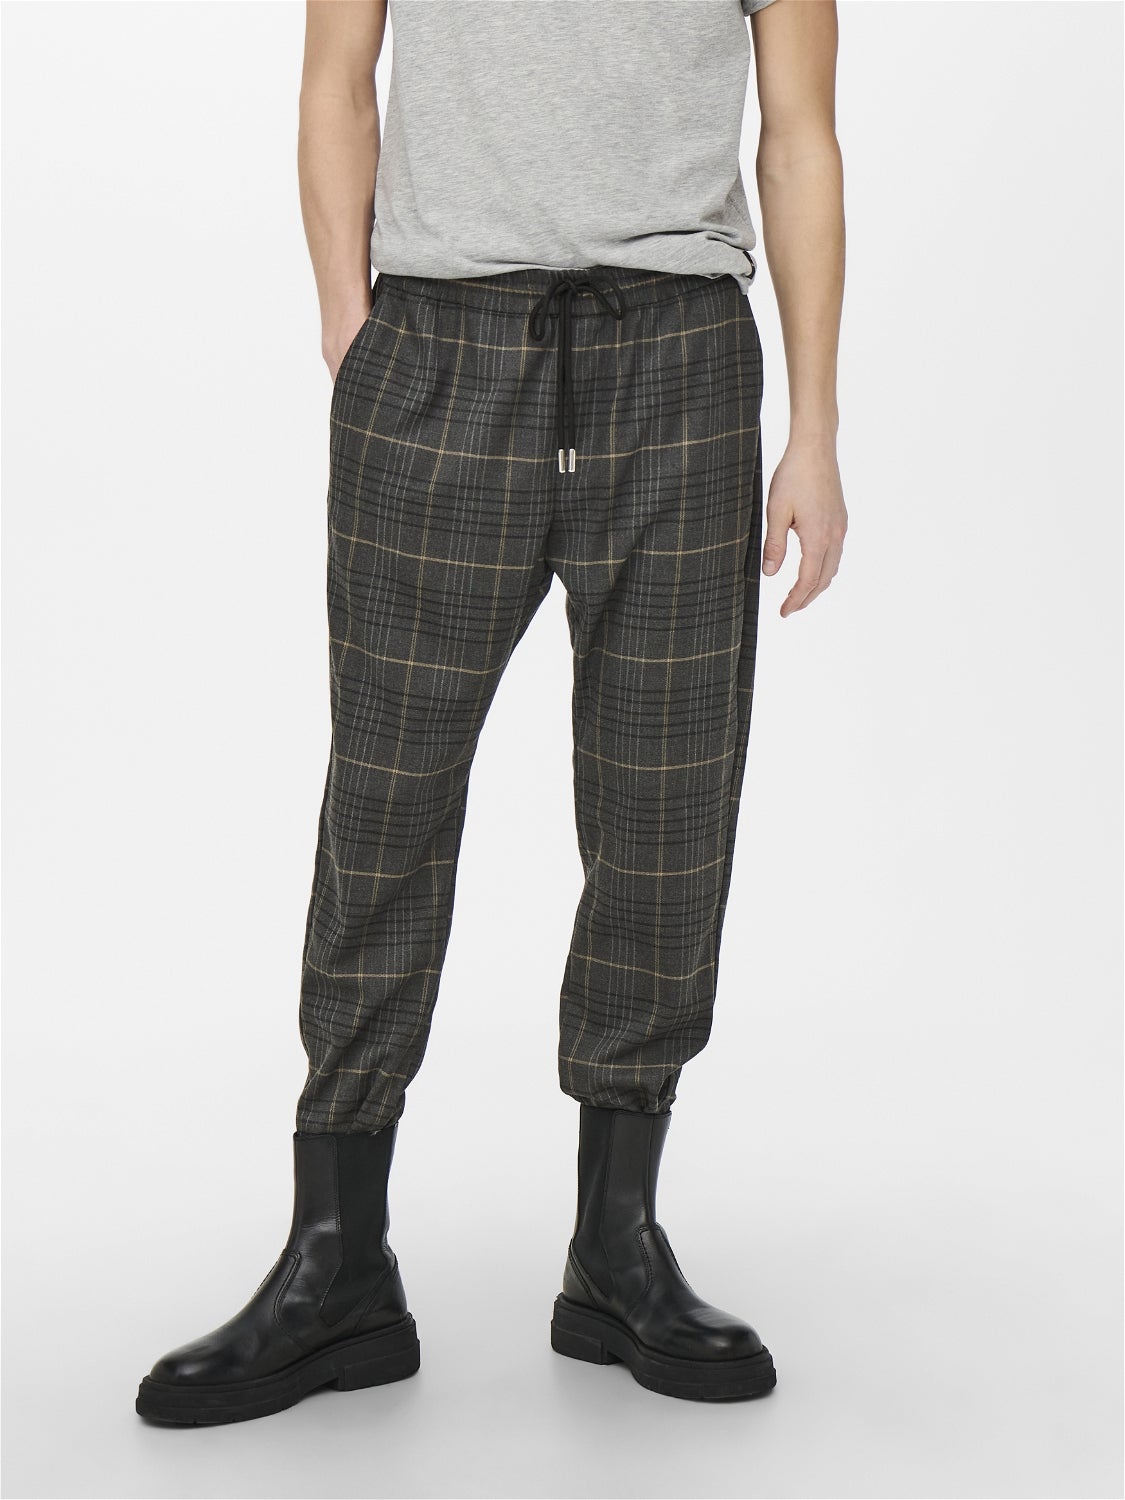 Buy Men Black Check Slim Fit Formal Trousers Online  677021  Peter England